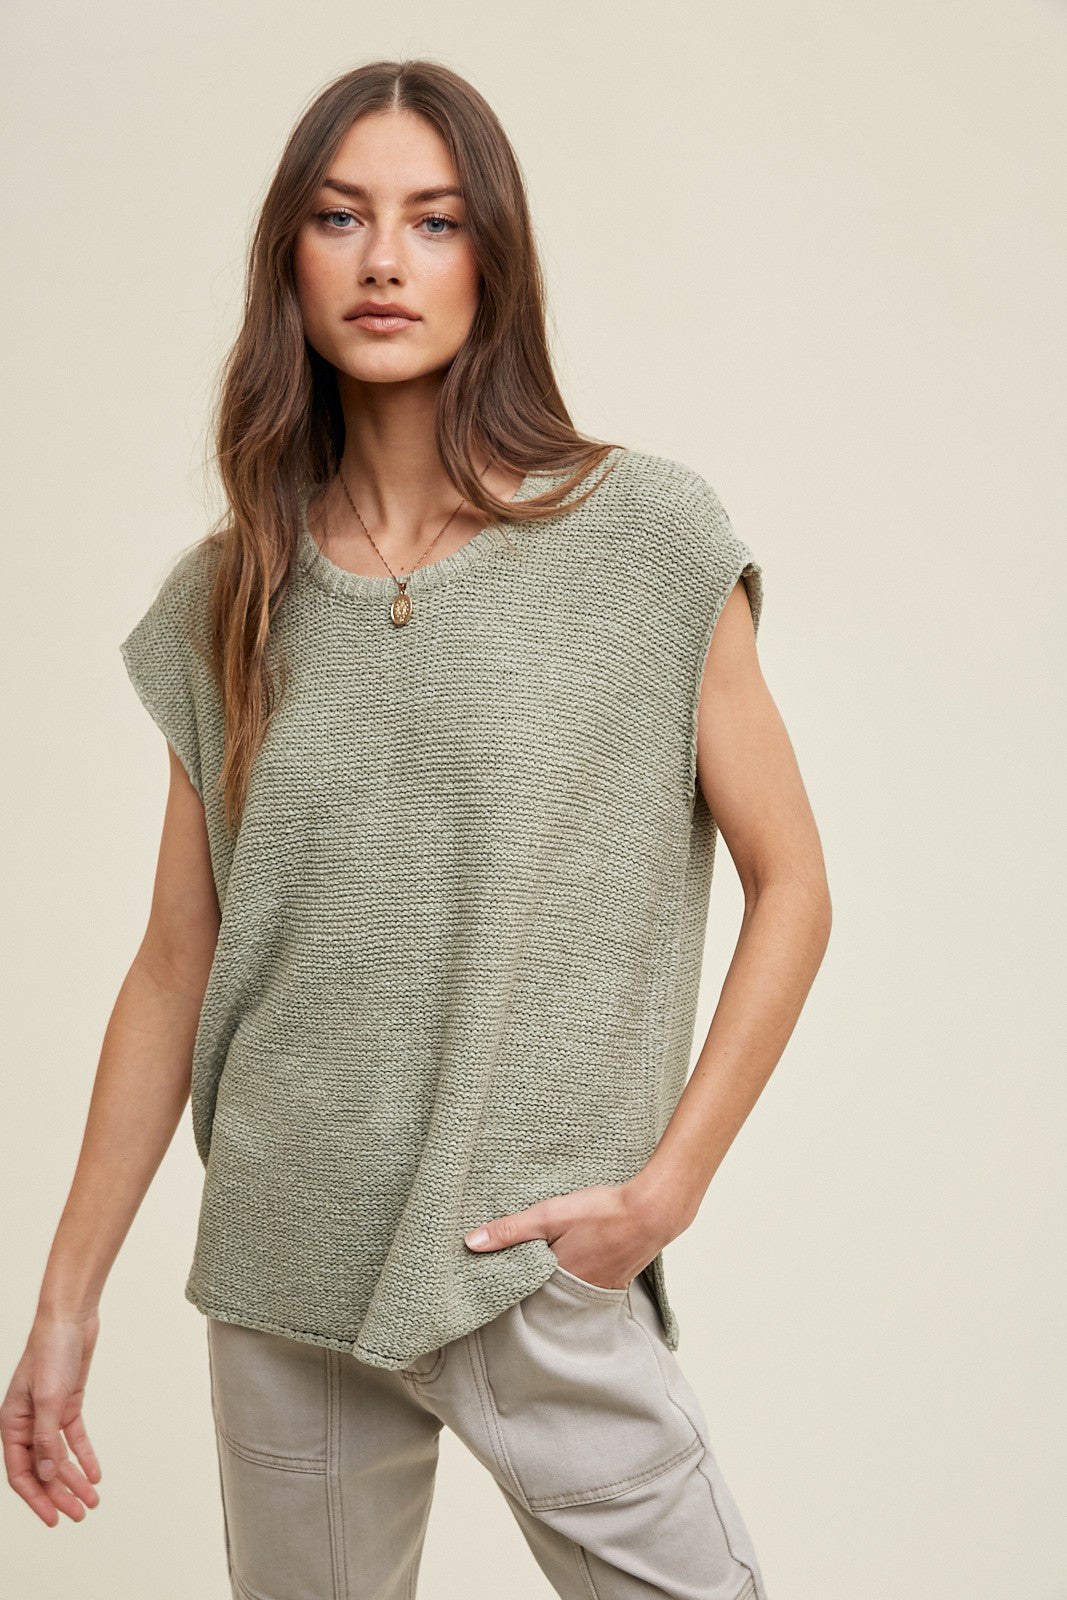 Ellie Girl Crochet Sweater Vest (Sage)